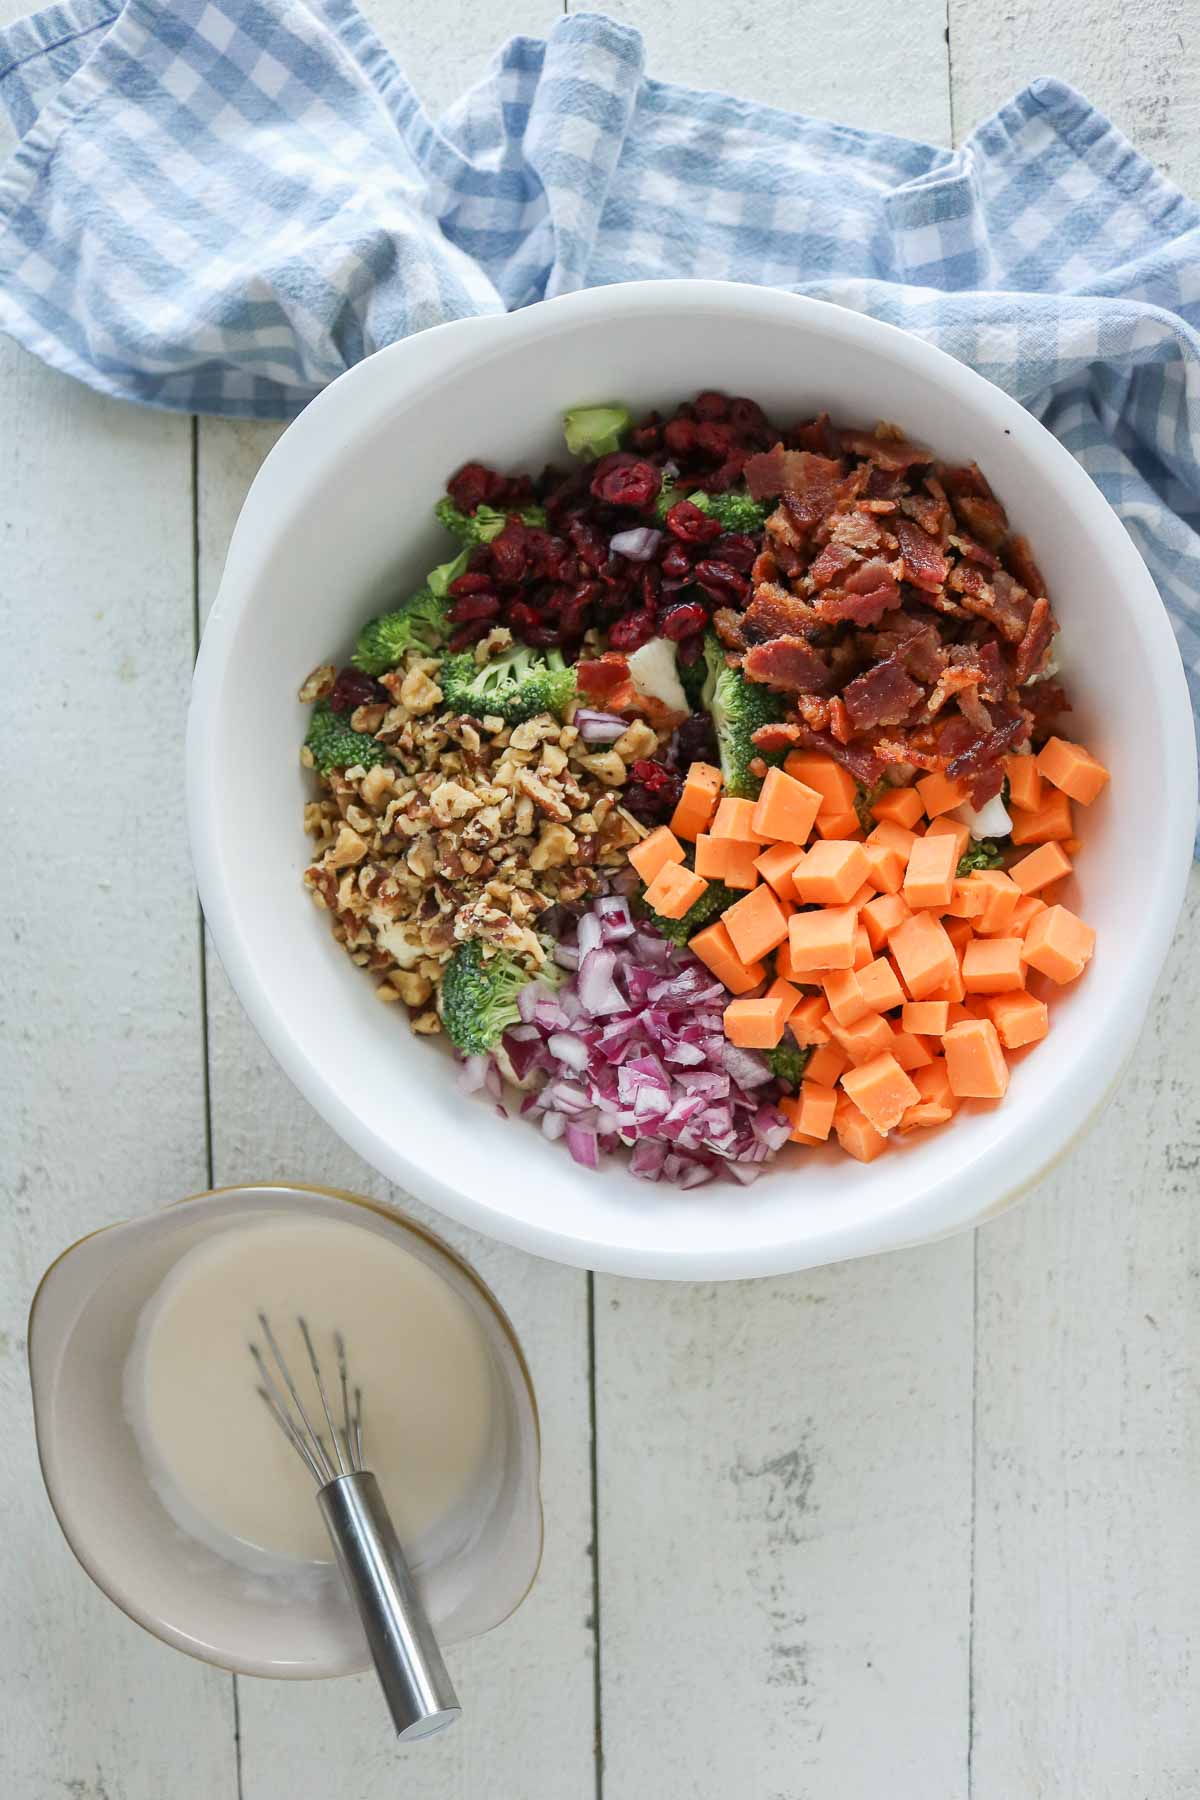 Cauliflower broccoli salad ingredients in a bowl alongside a bowl of dressing.